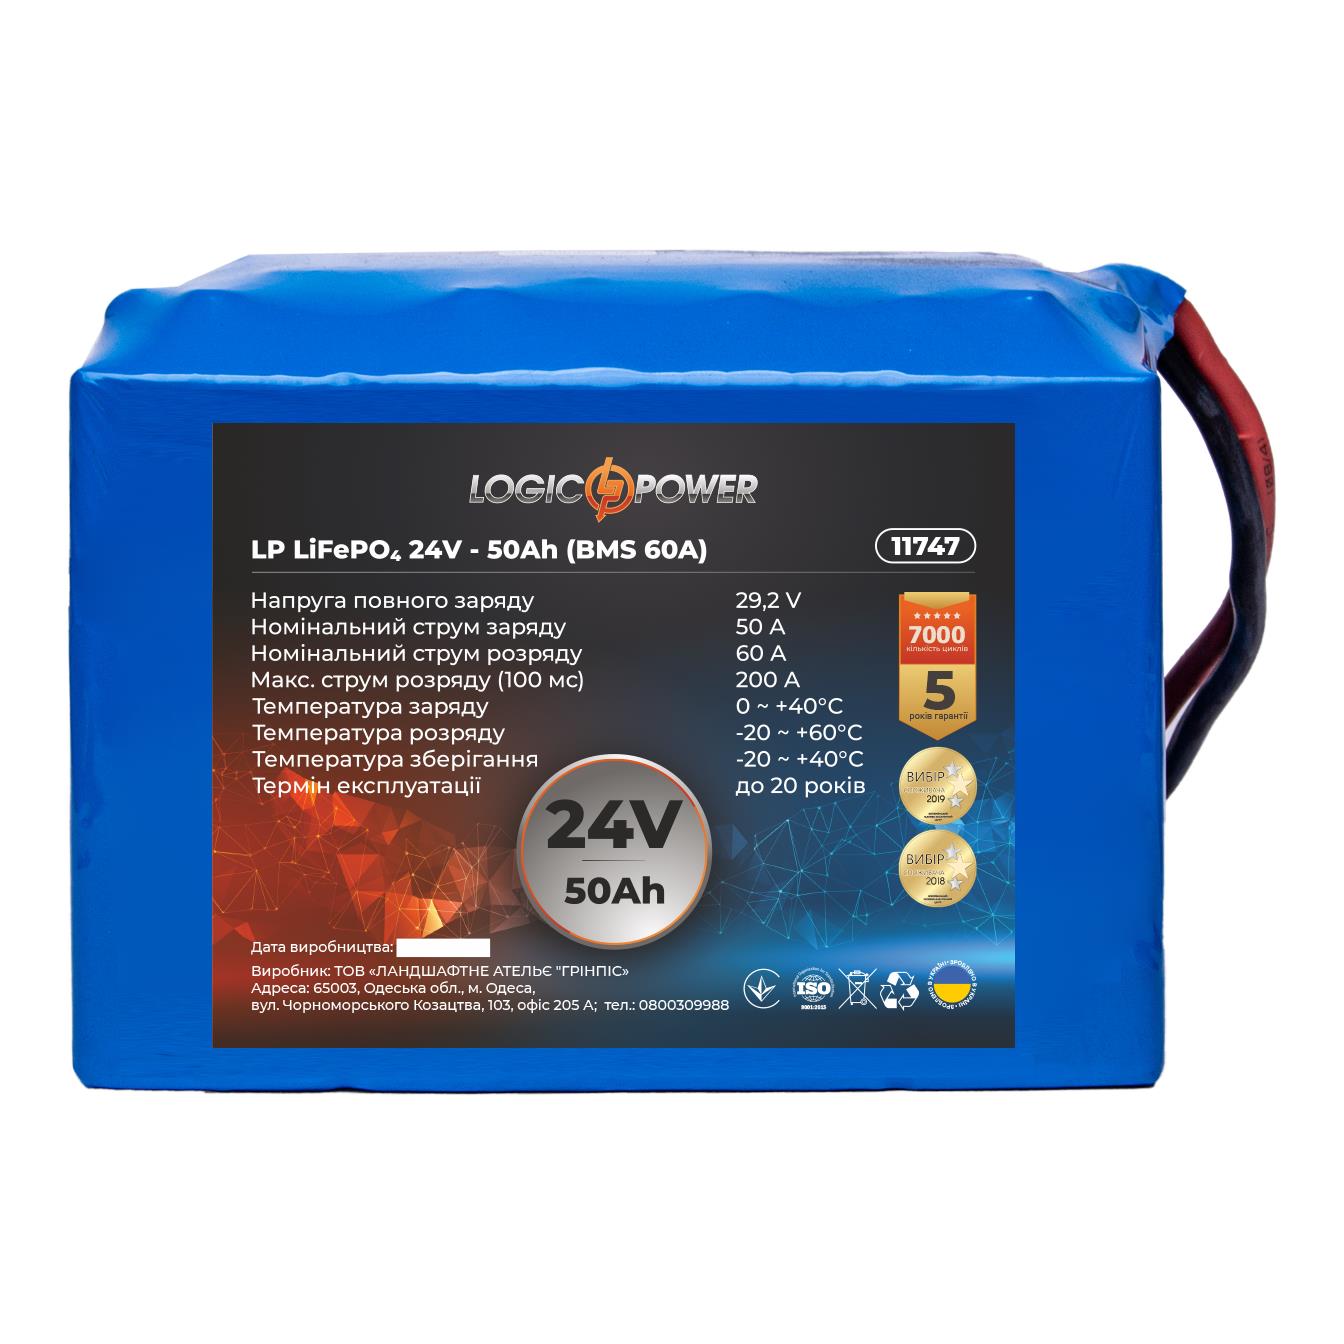 LogicPower LP LiFePO4 24V - 50 Ah (BMS 60A) (11747)